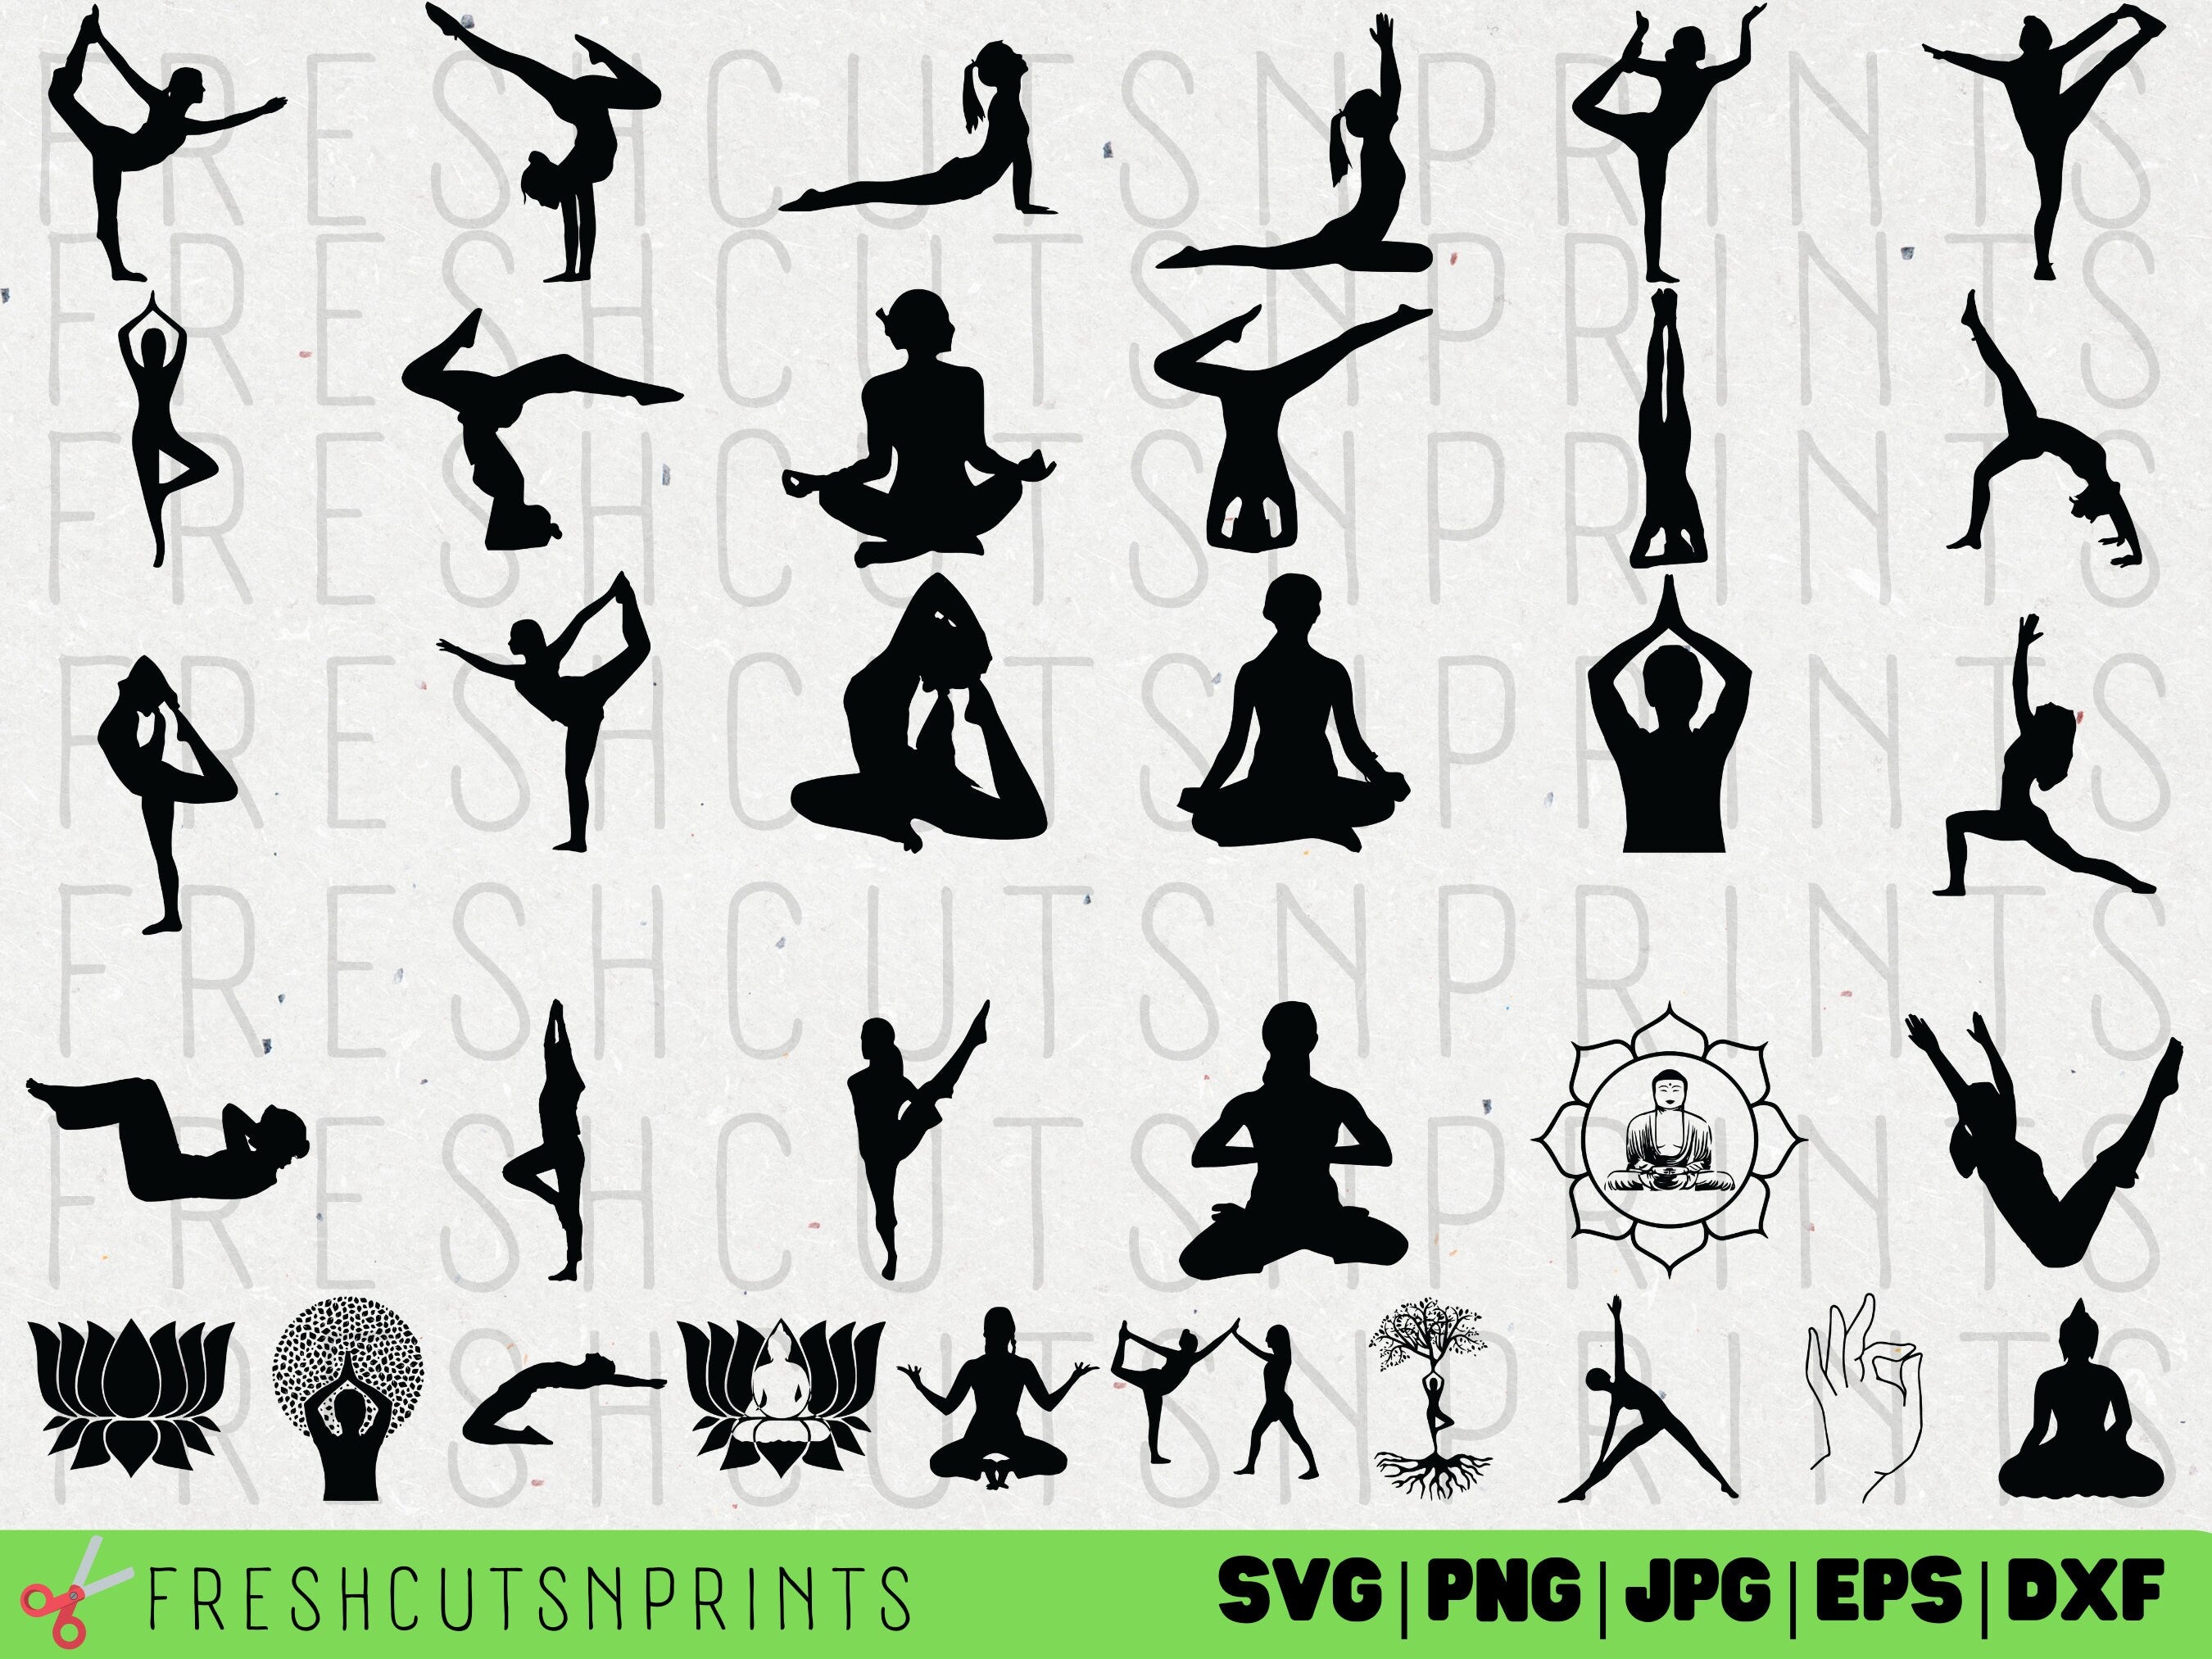 Yoga Asana Poses svg, Yoga Silhouette, Free Commercial Use